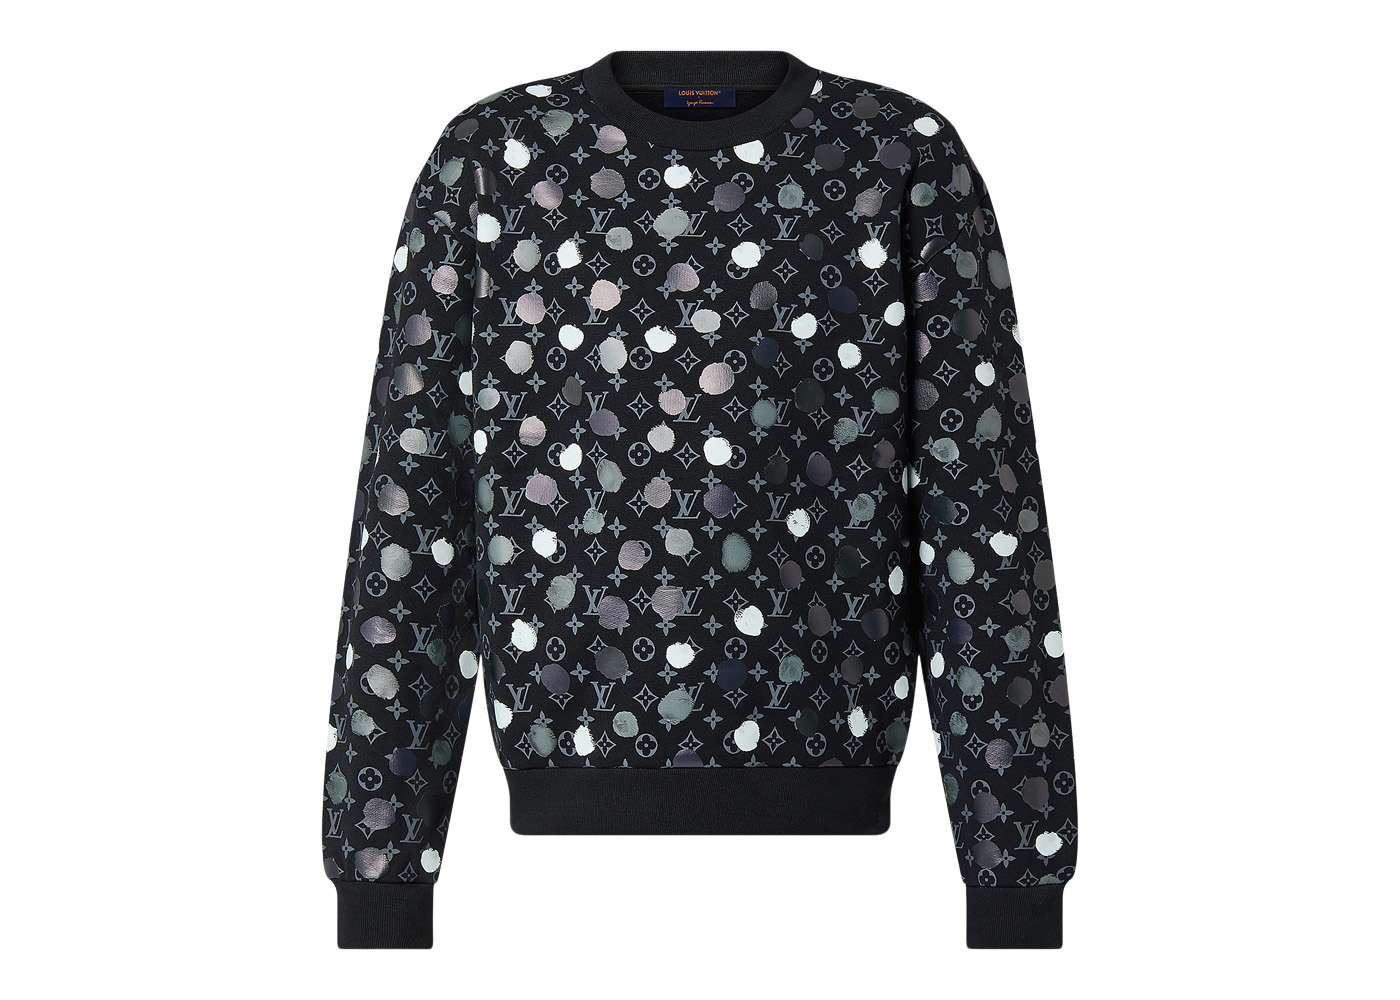 Louis Vuitton x Yayoi Kusama Infinity Dots Printed Crewneck Black